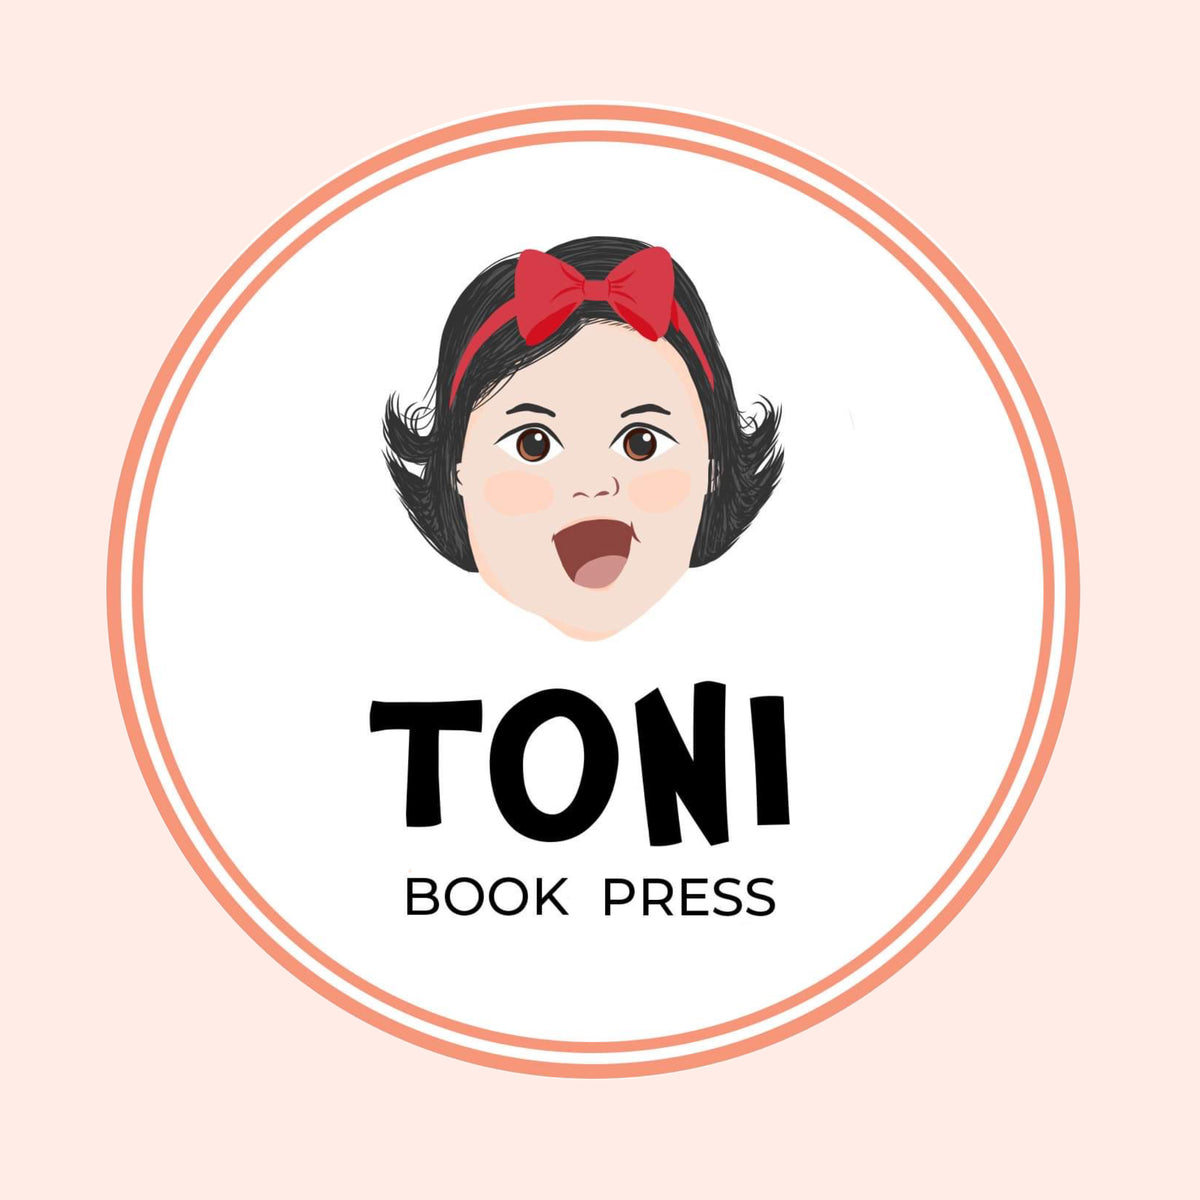 Toni Book Press